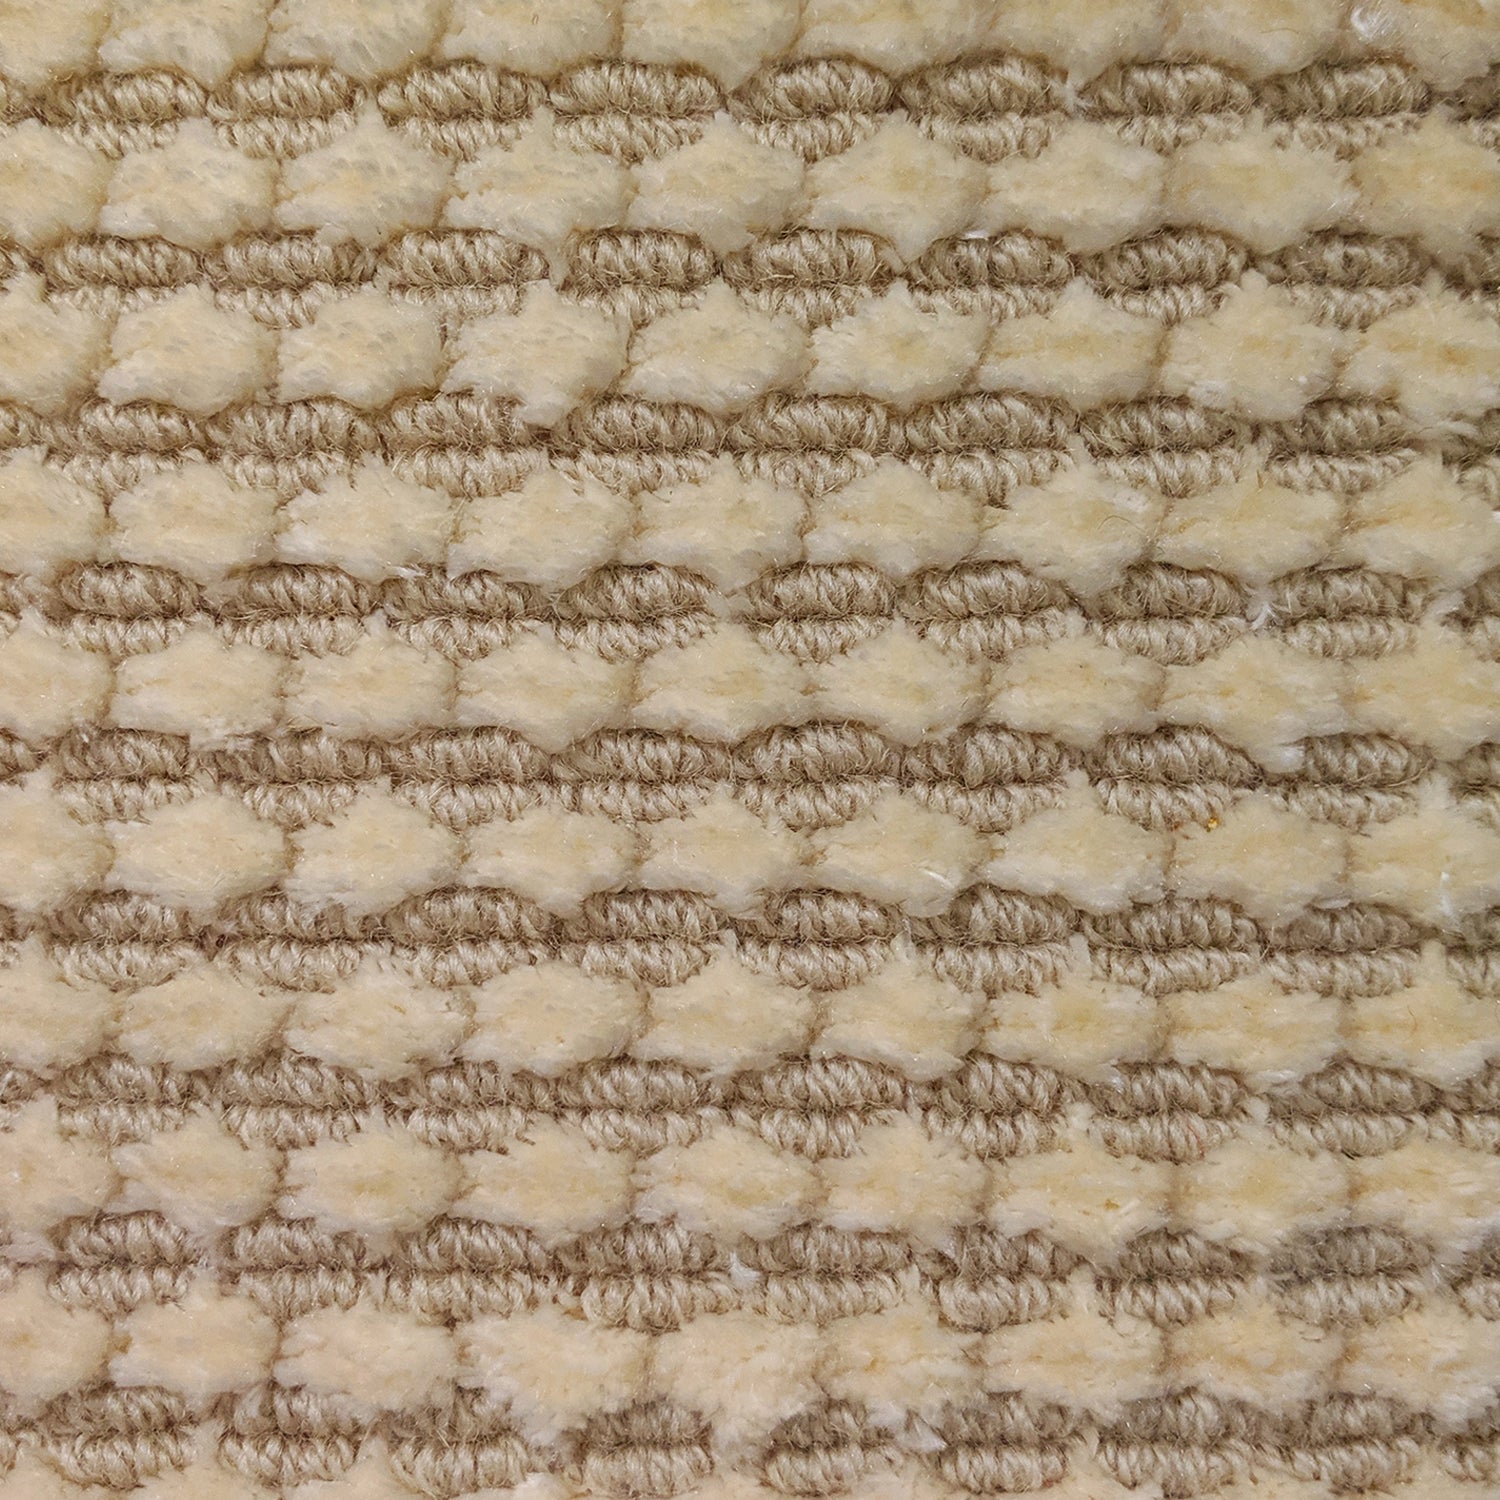 Wool-silk broadloom carpet swatch in a dimensional flat-and-tufted grid weave in beige.